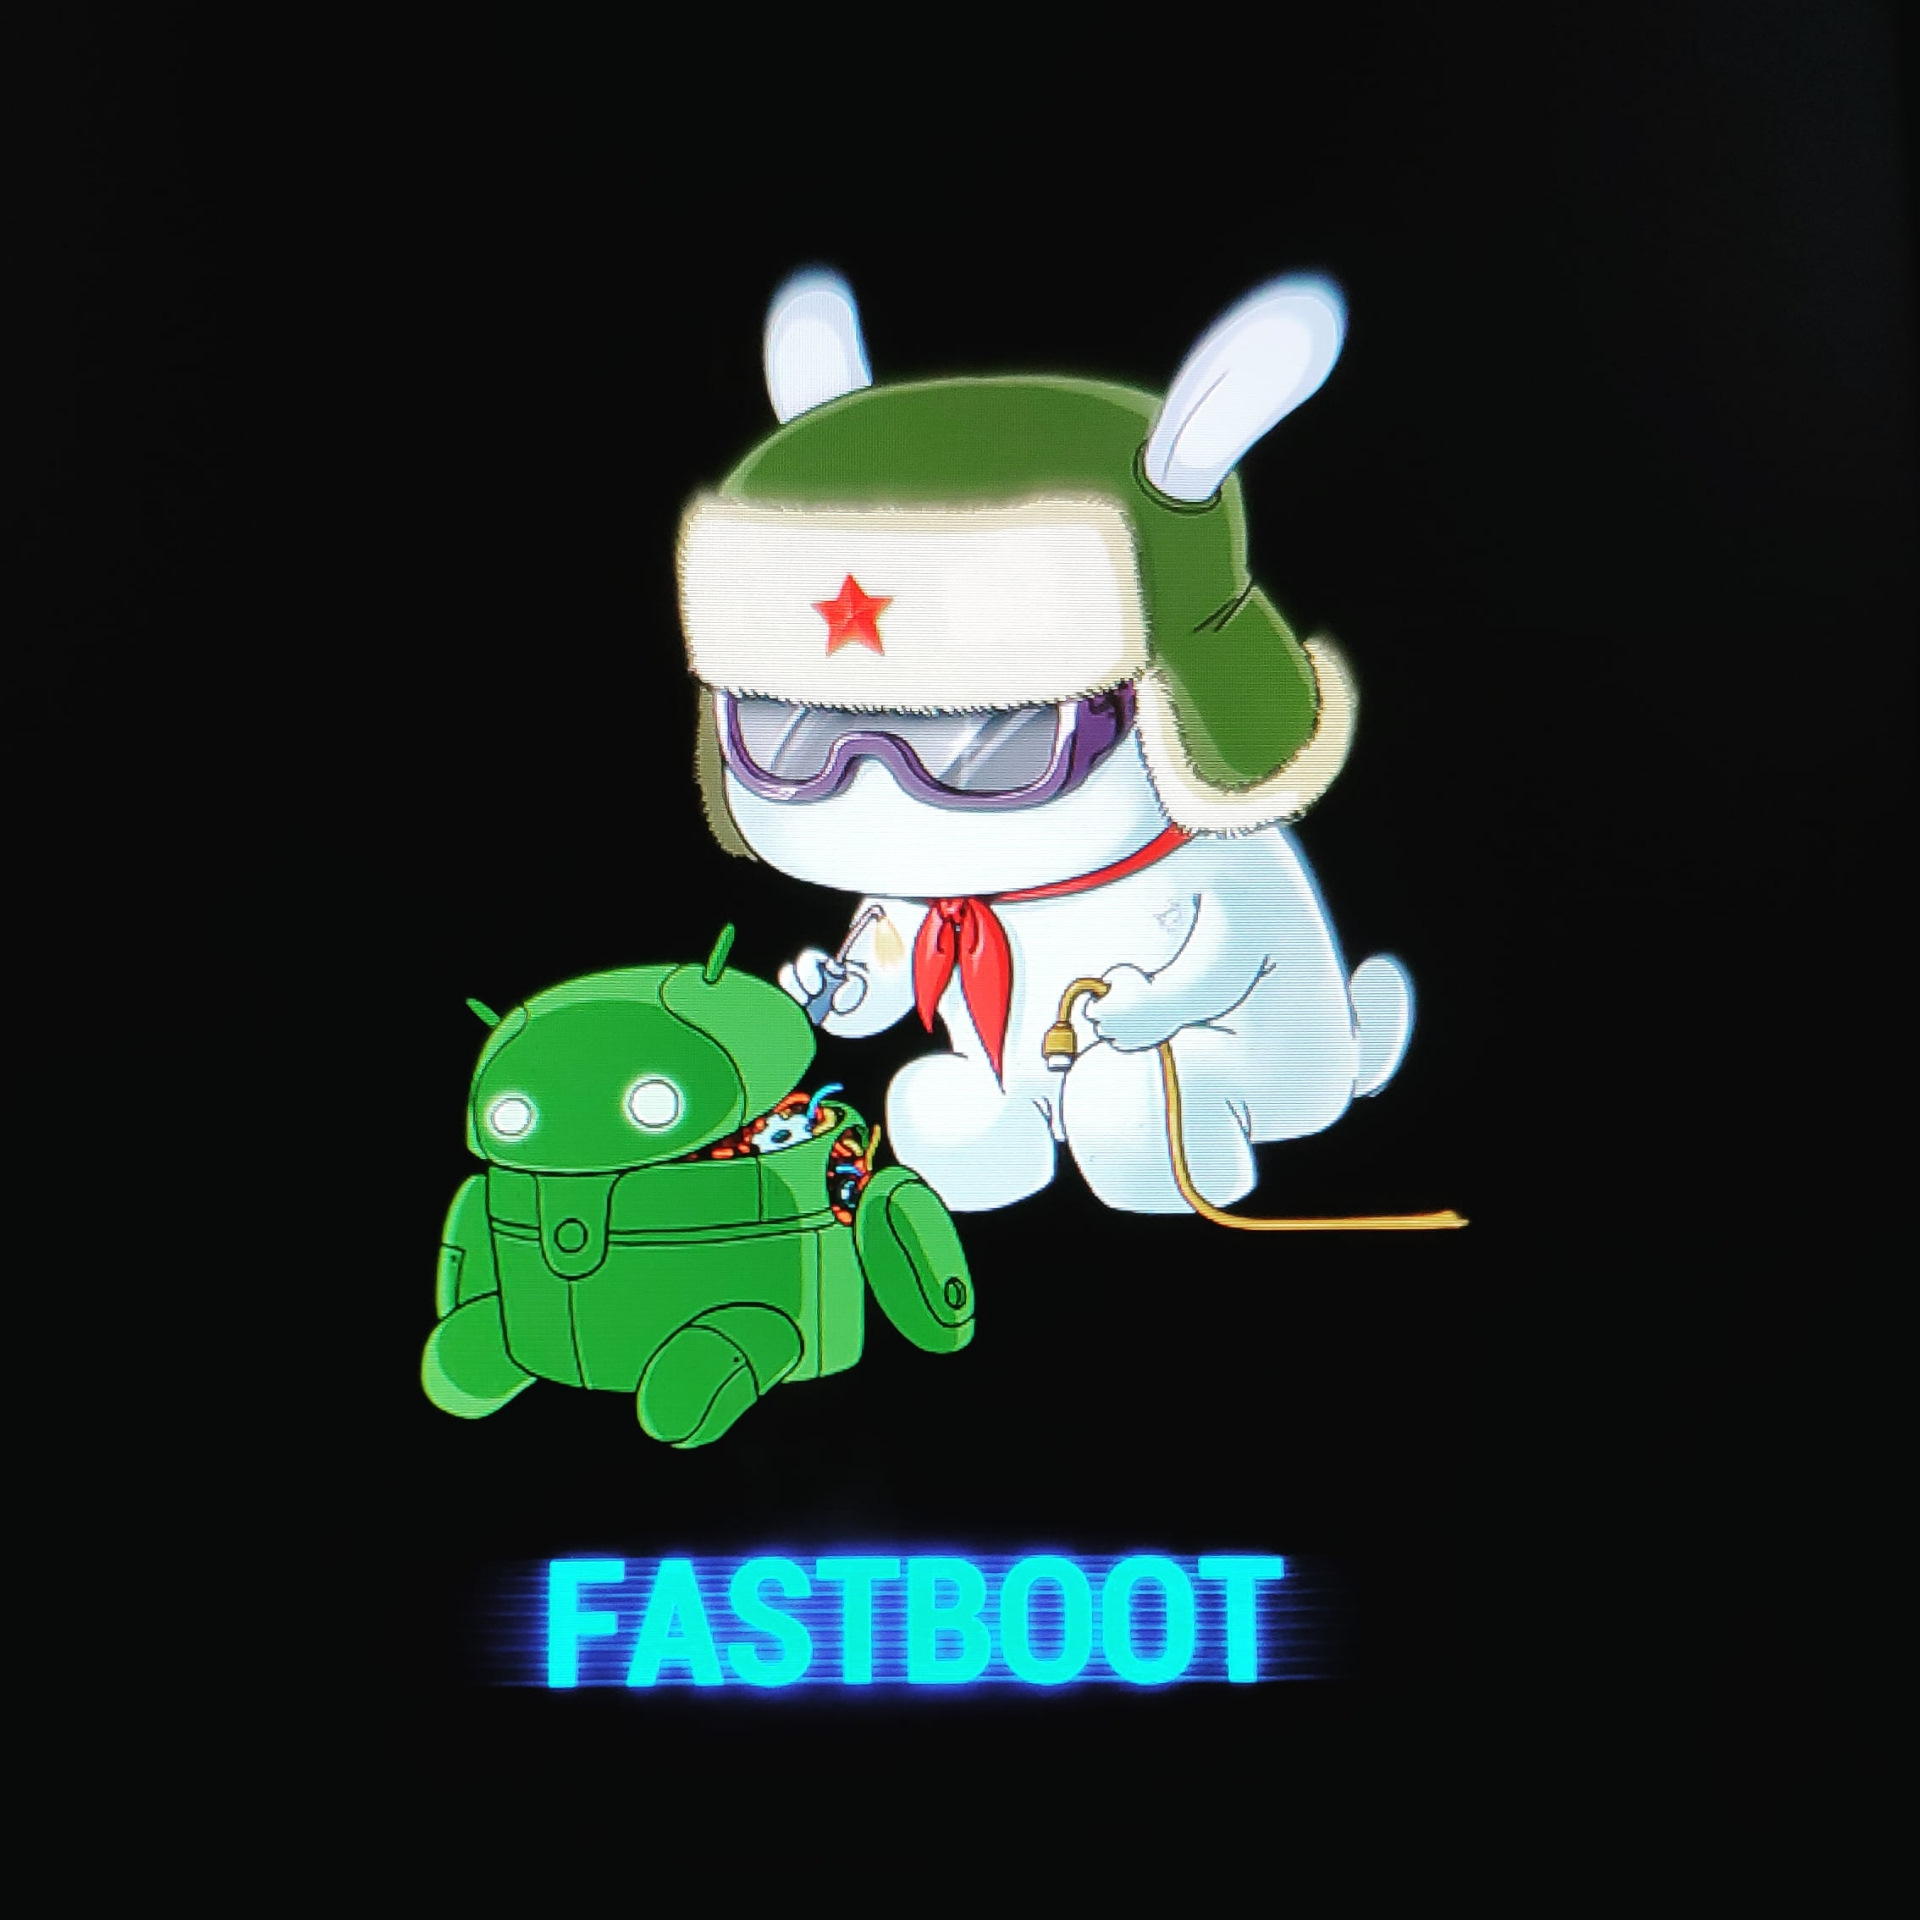 Режим fastboot redmi. Кролик Xiaomi Fastboot. Заяц чинит андроид Xiaomi. Xiaomi Fastboot Screen. Заяц андроид Fastboot.